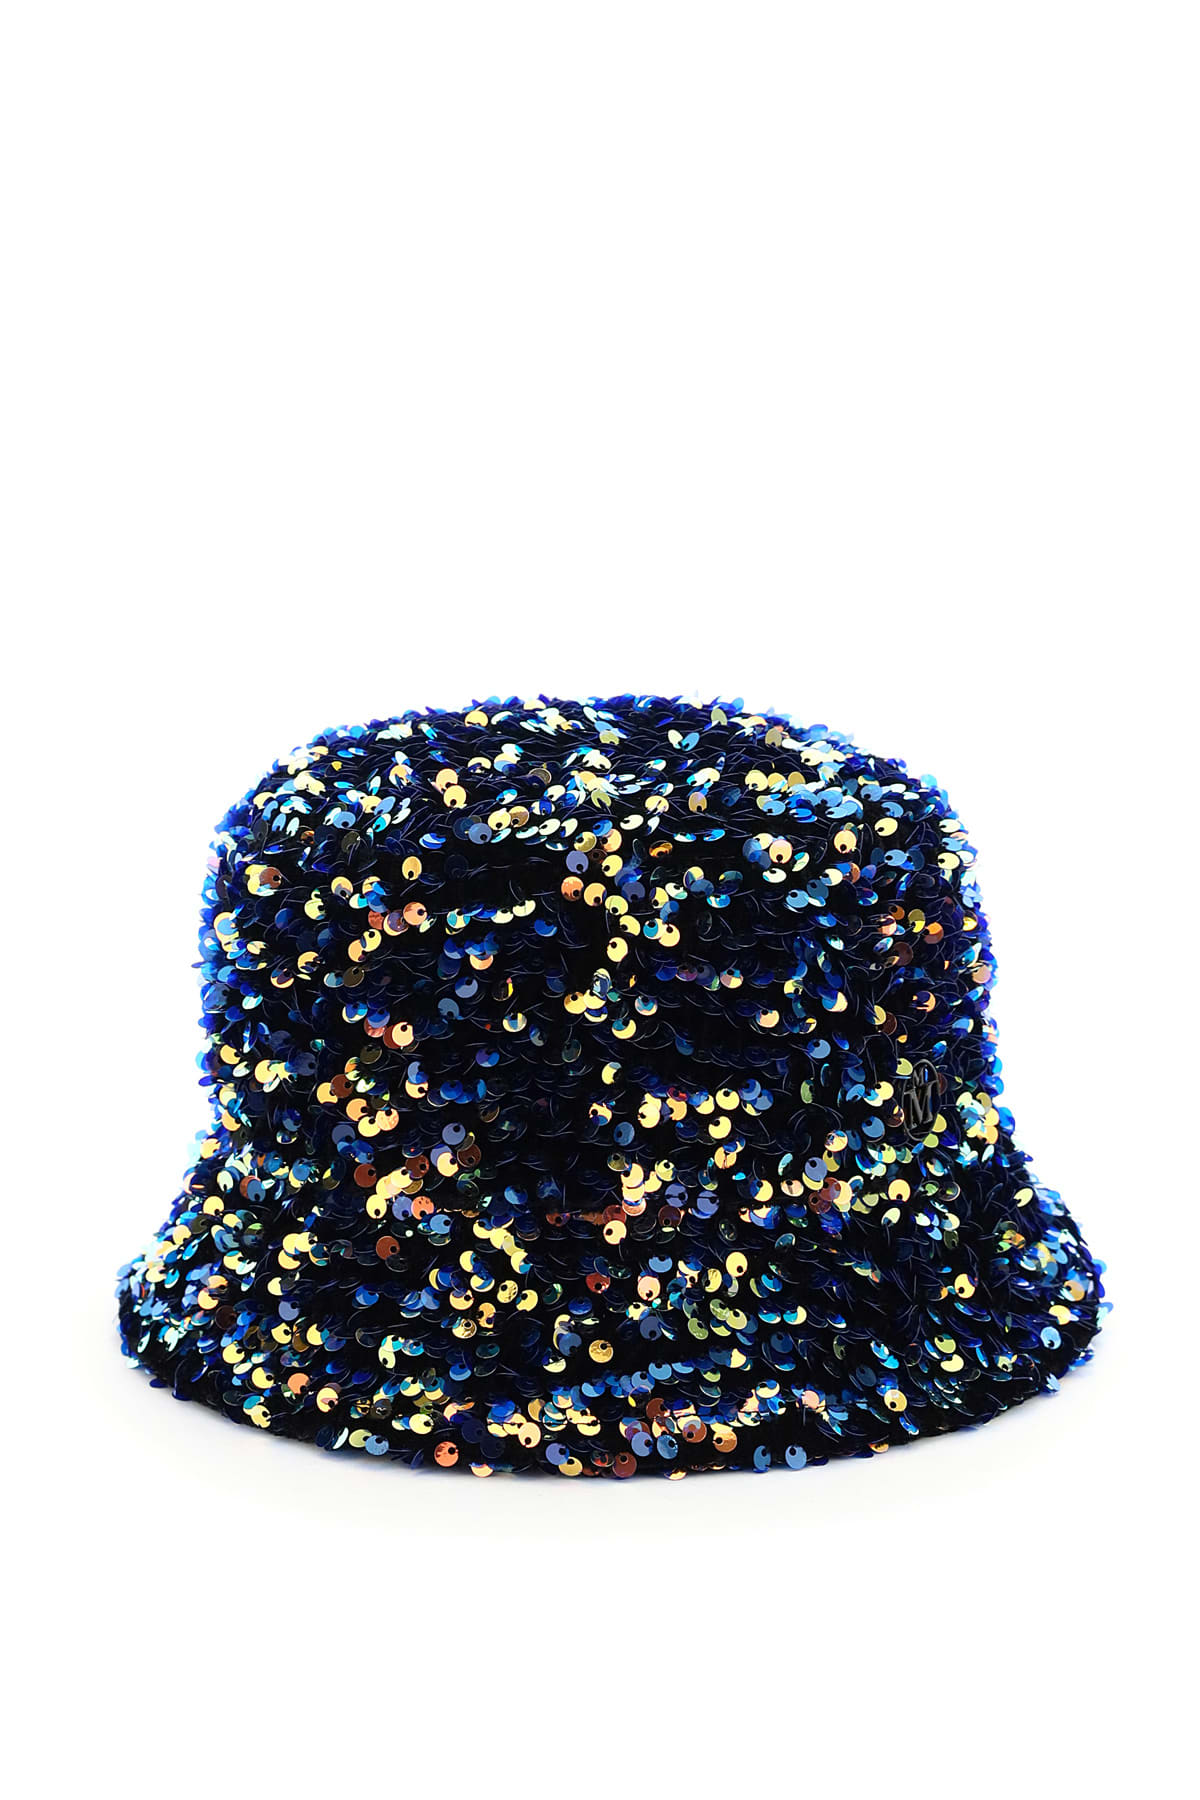 Maison Michel Axel Flora Sequined Bucket Hat